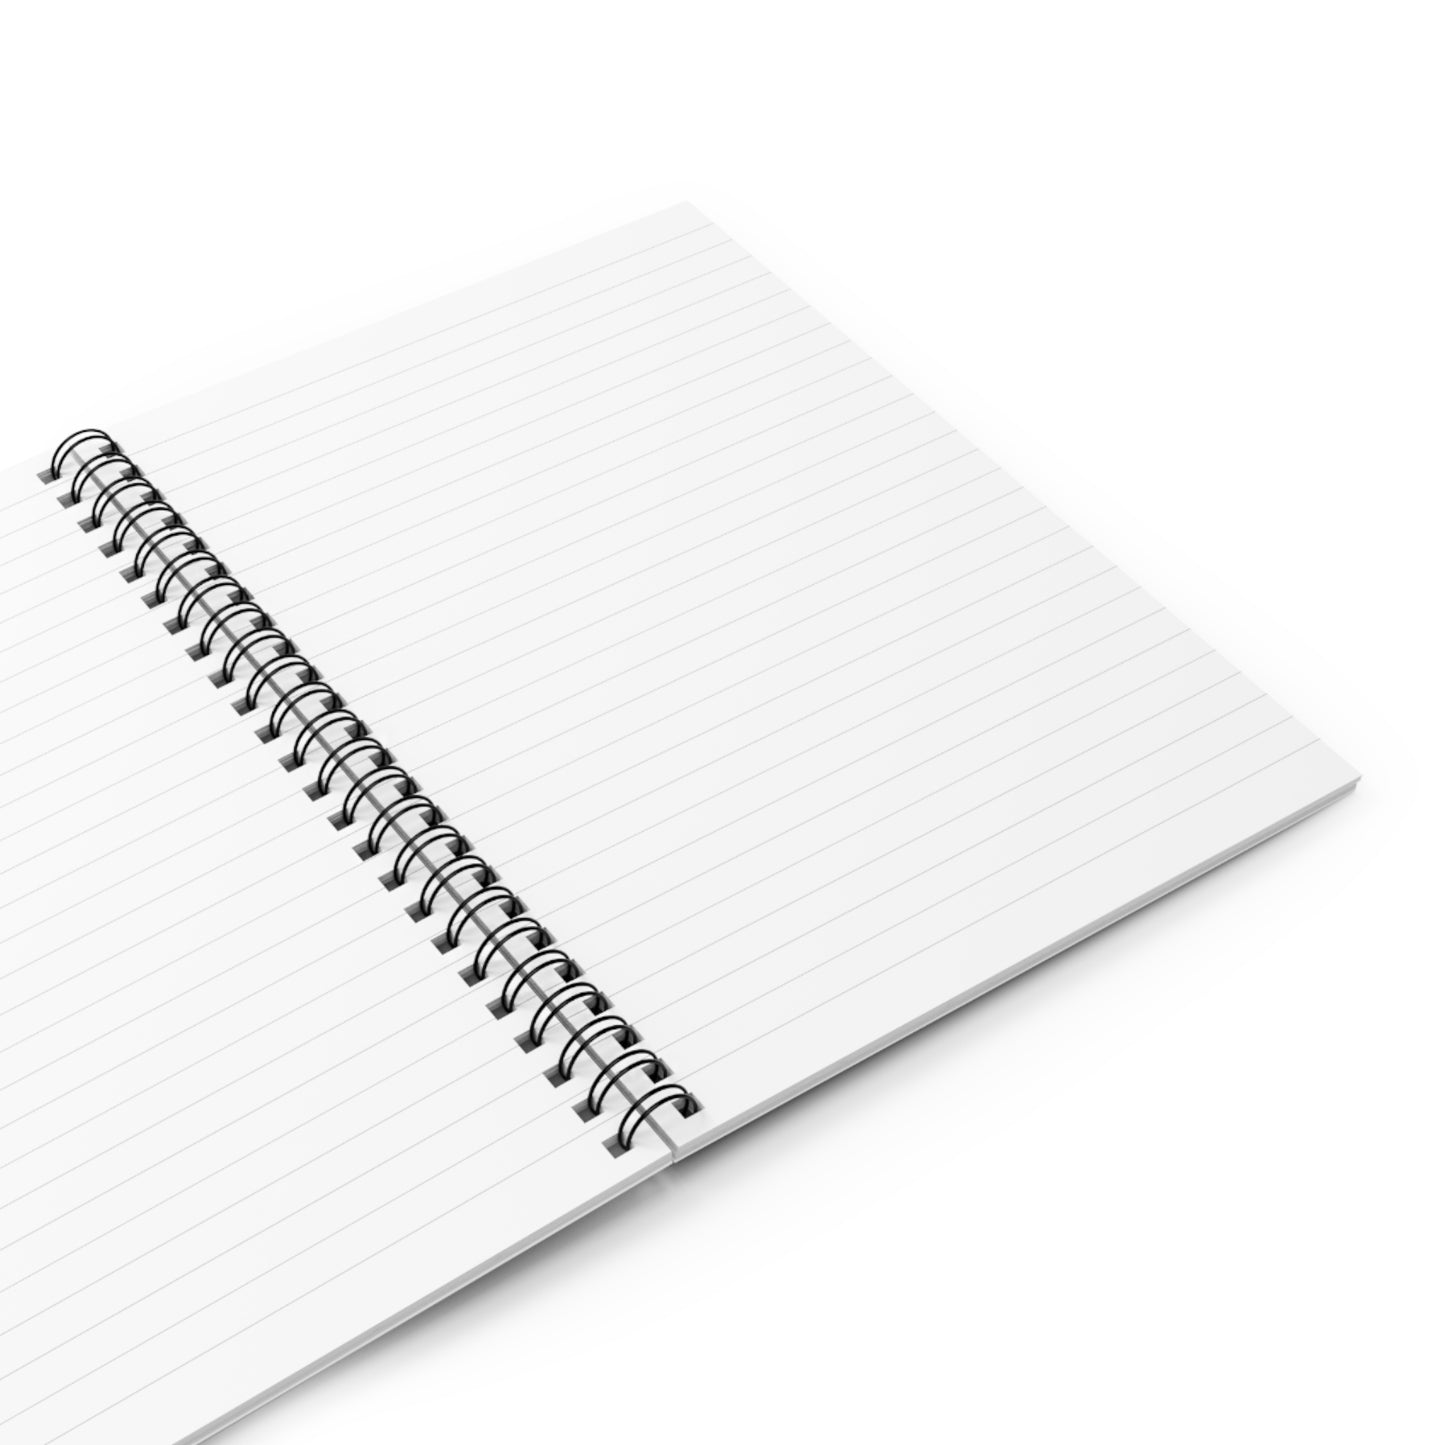 Zenethic Notebook Journal